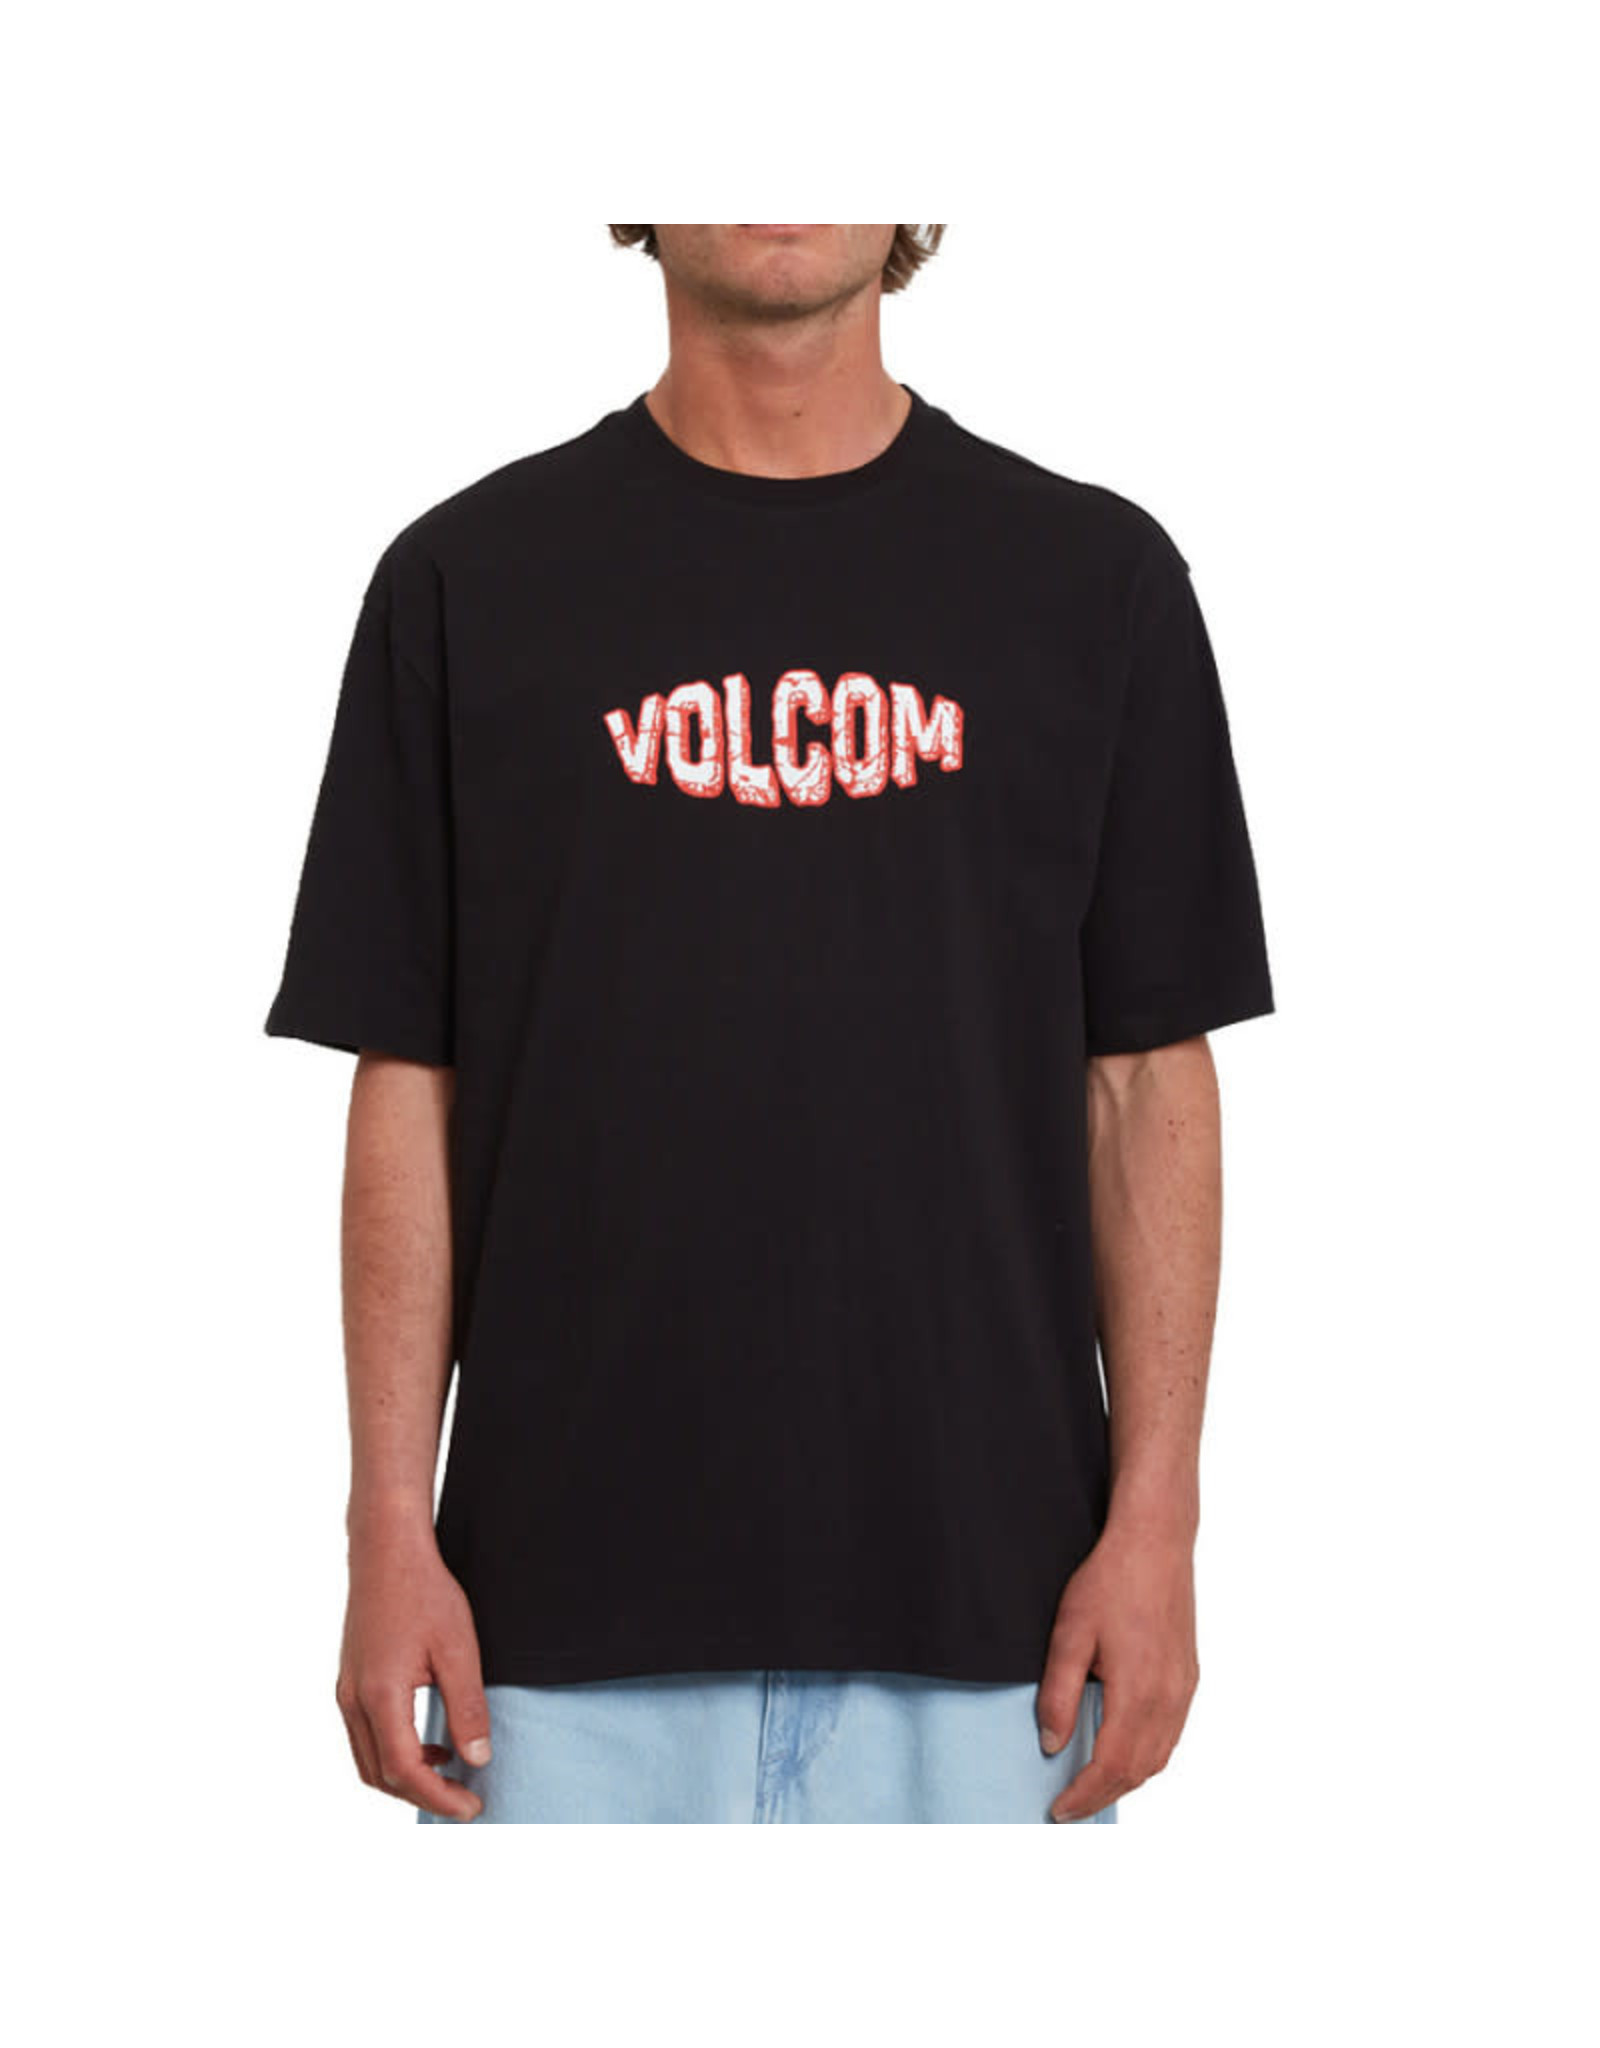 Volcom Volcom Crusher Black